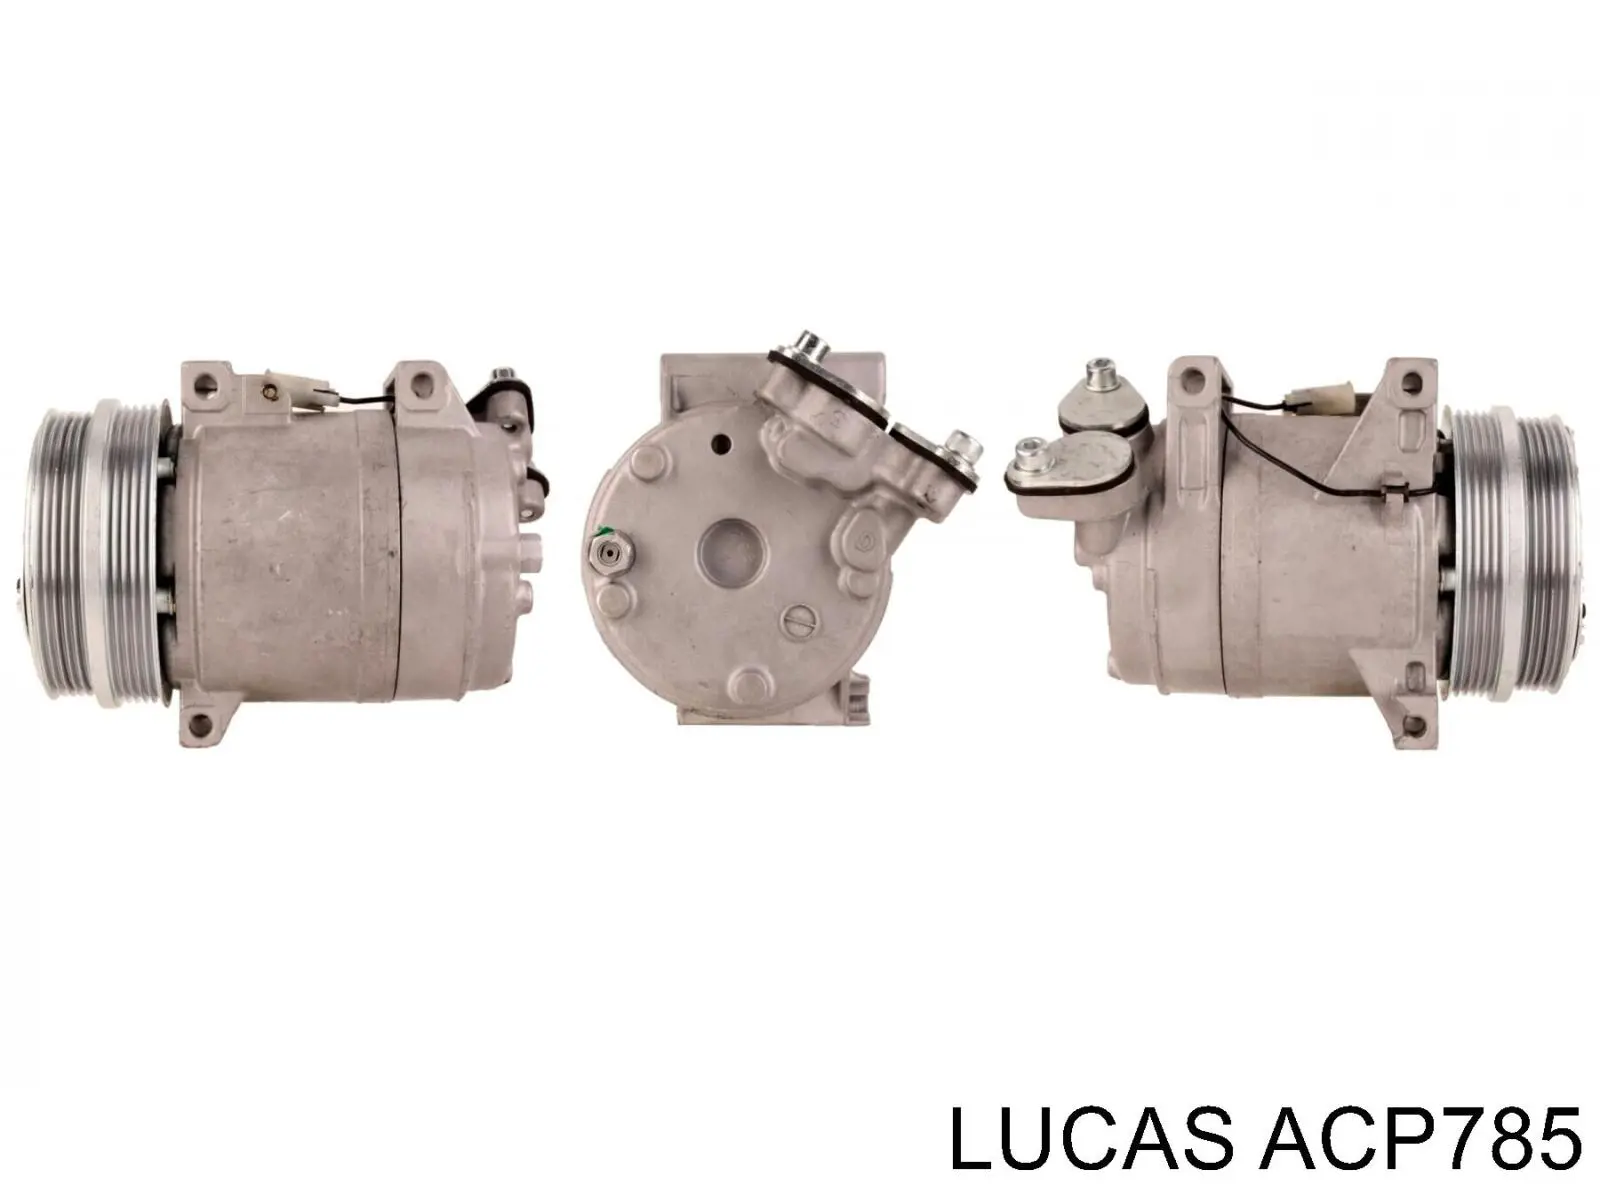 Compresor de aire acondicionado ACP785 Lucas